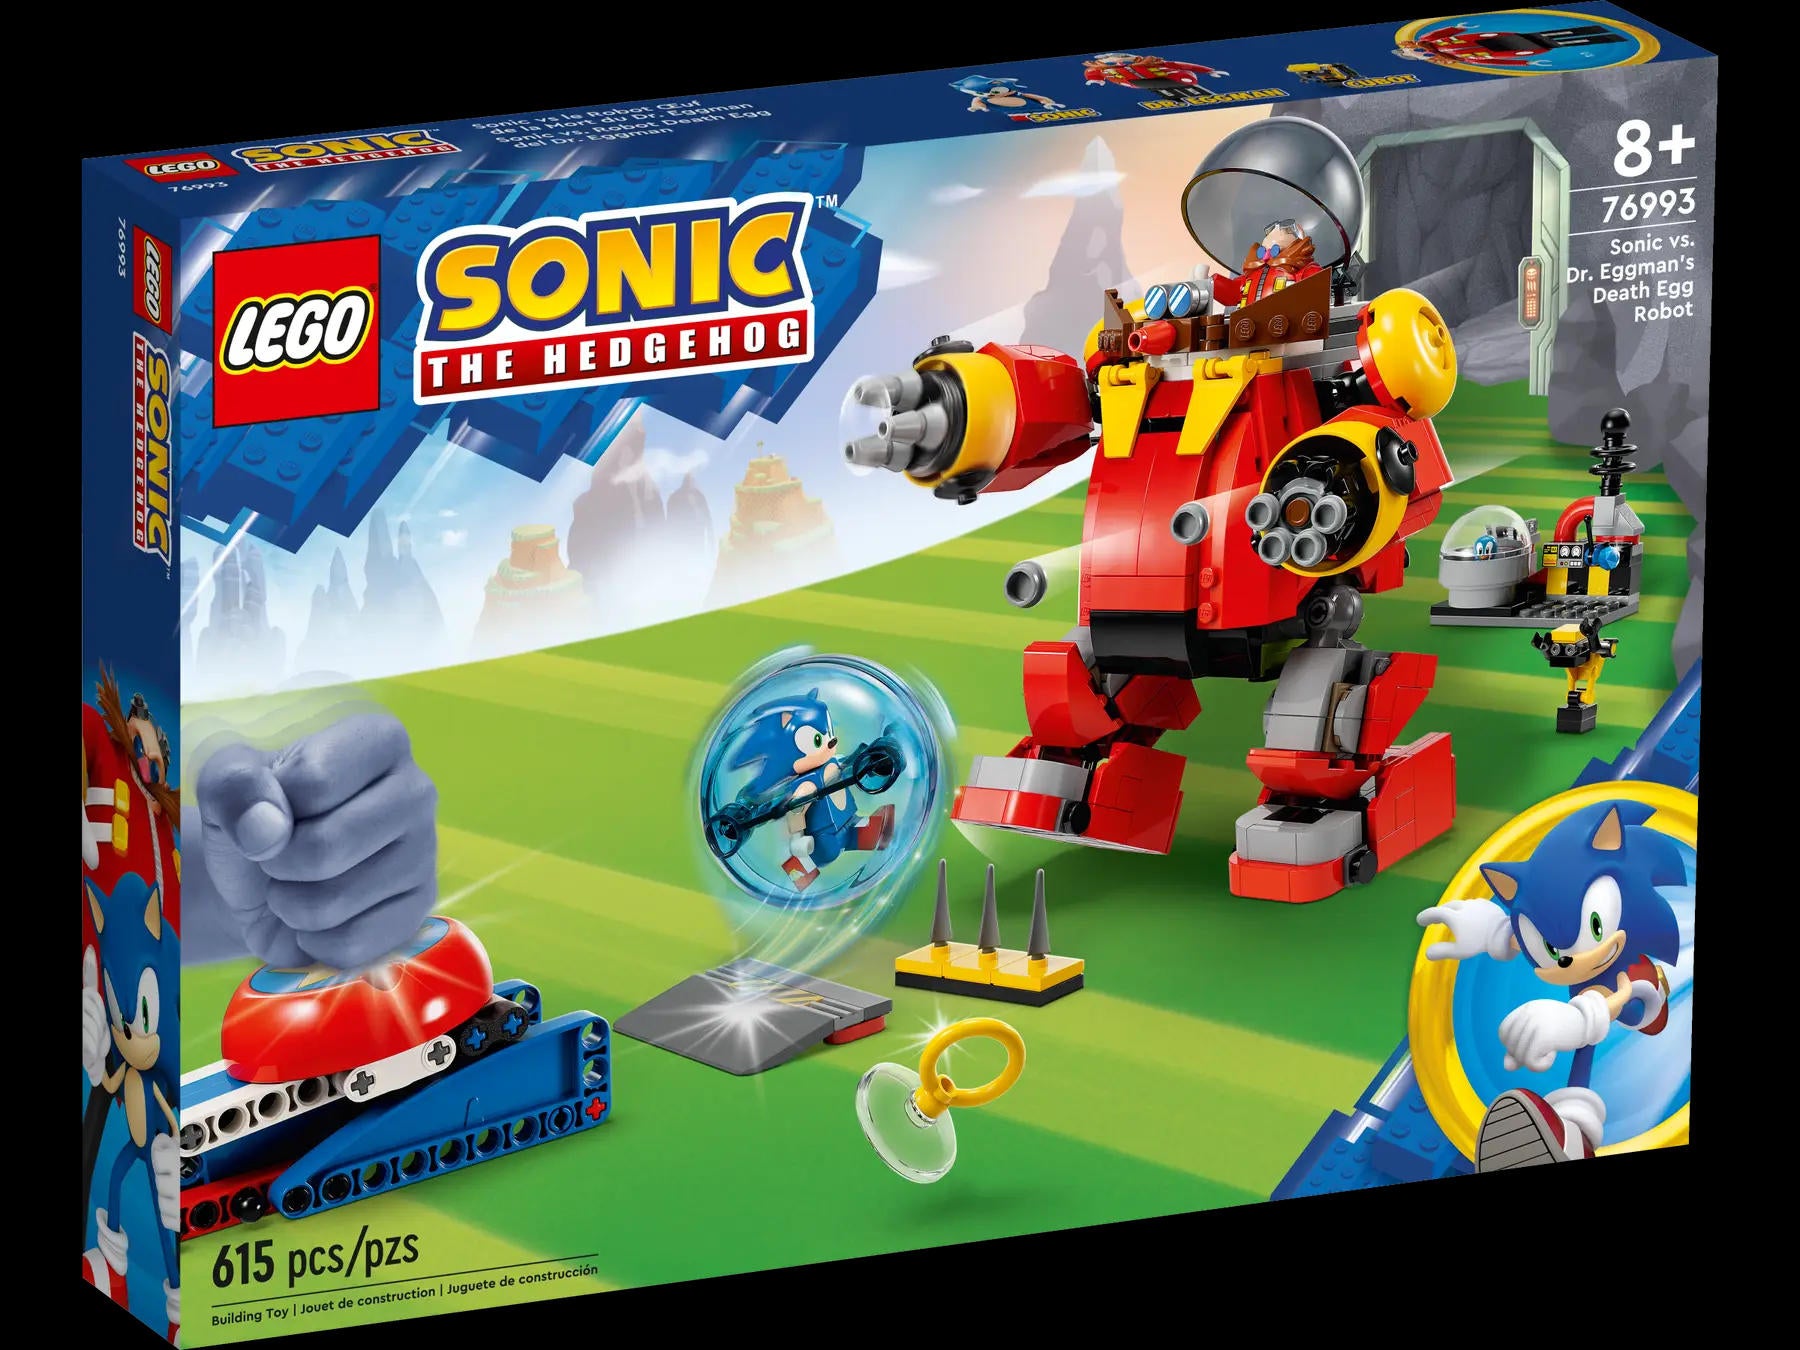 LEGO Sonic the Hedgehog vs Dr. Eggman's Egg Robot Set Is On the